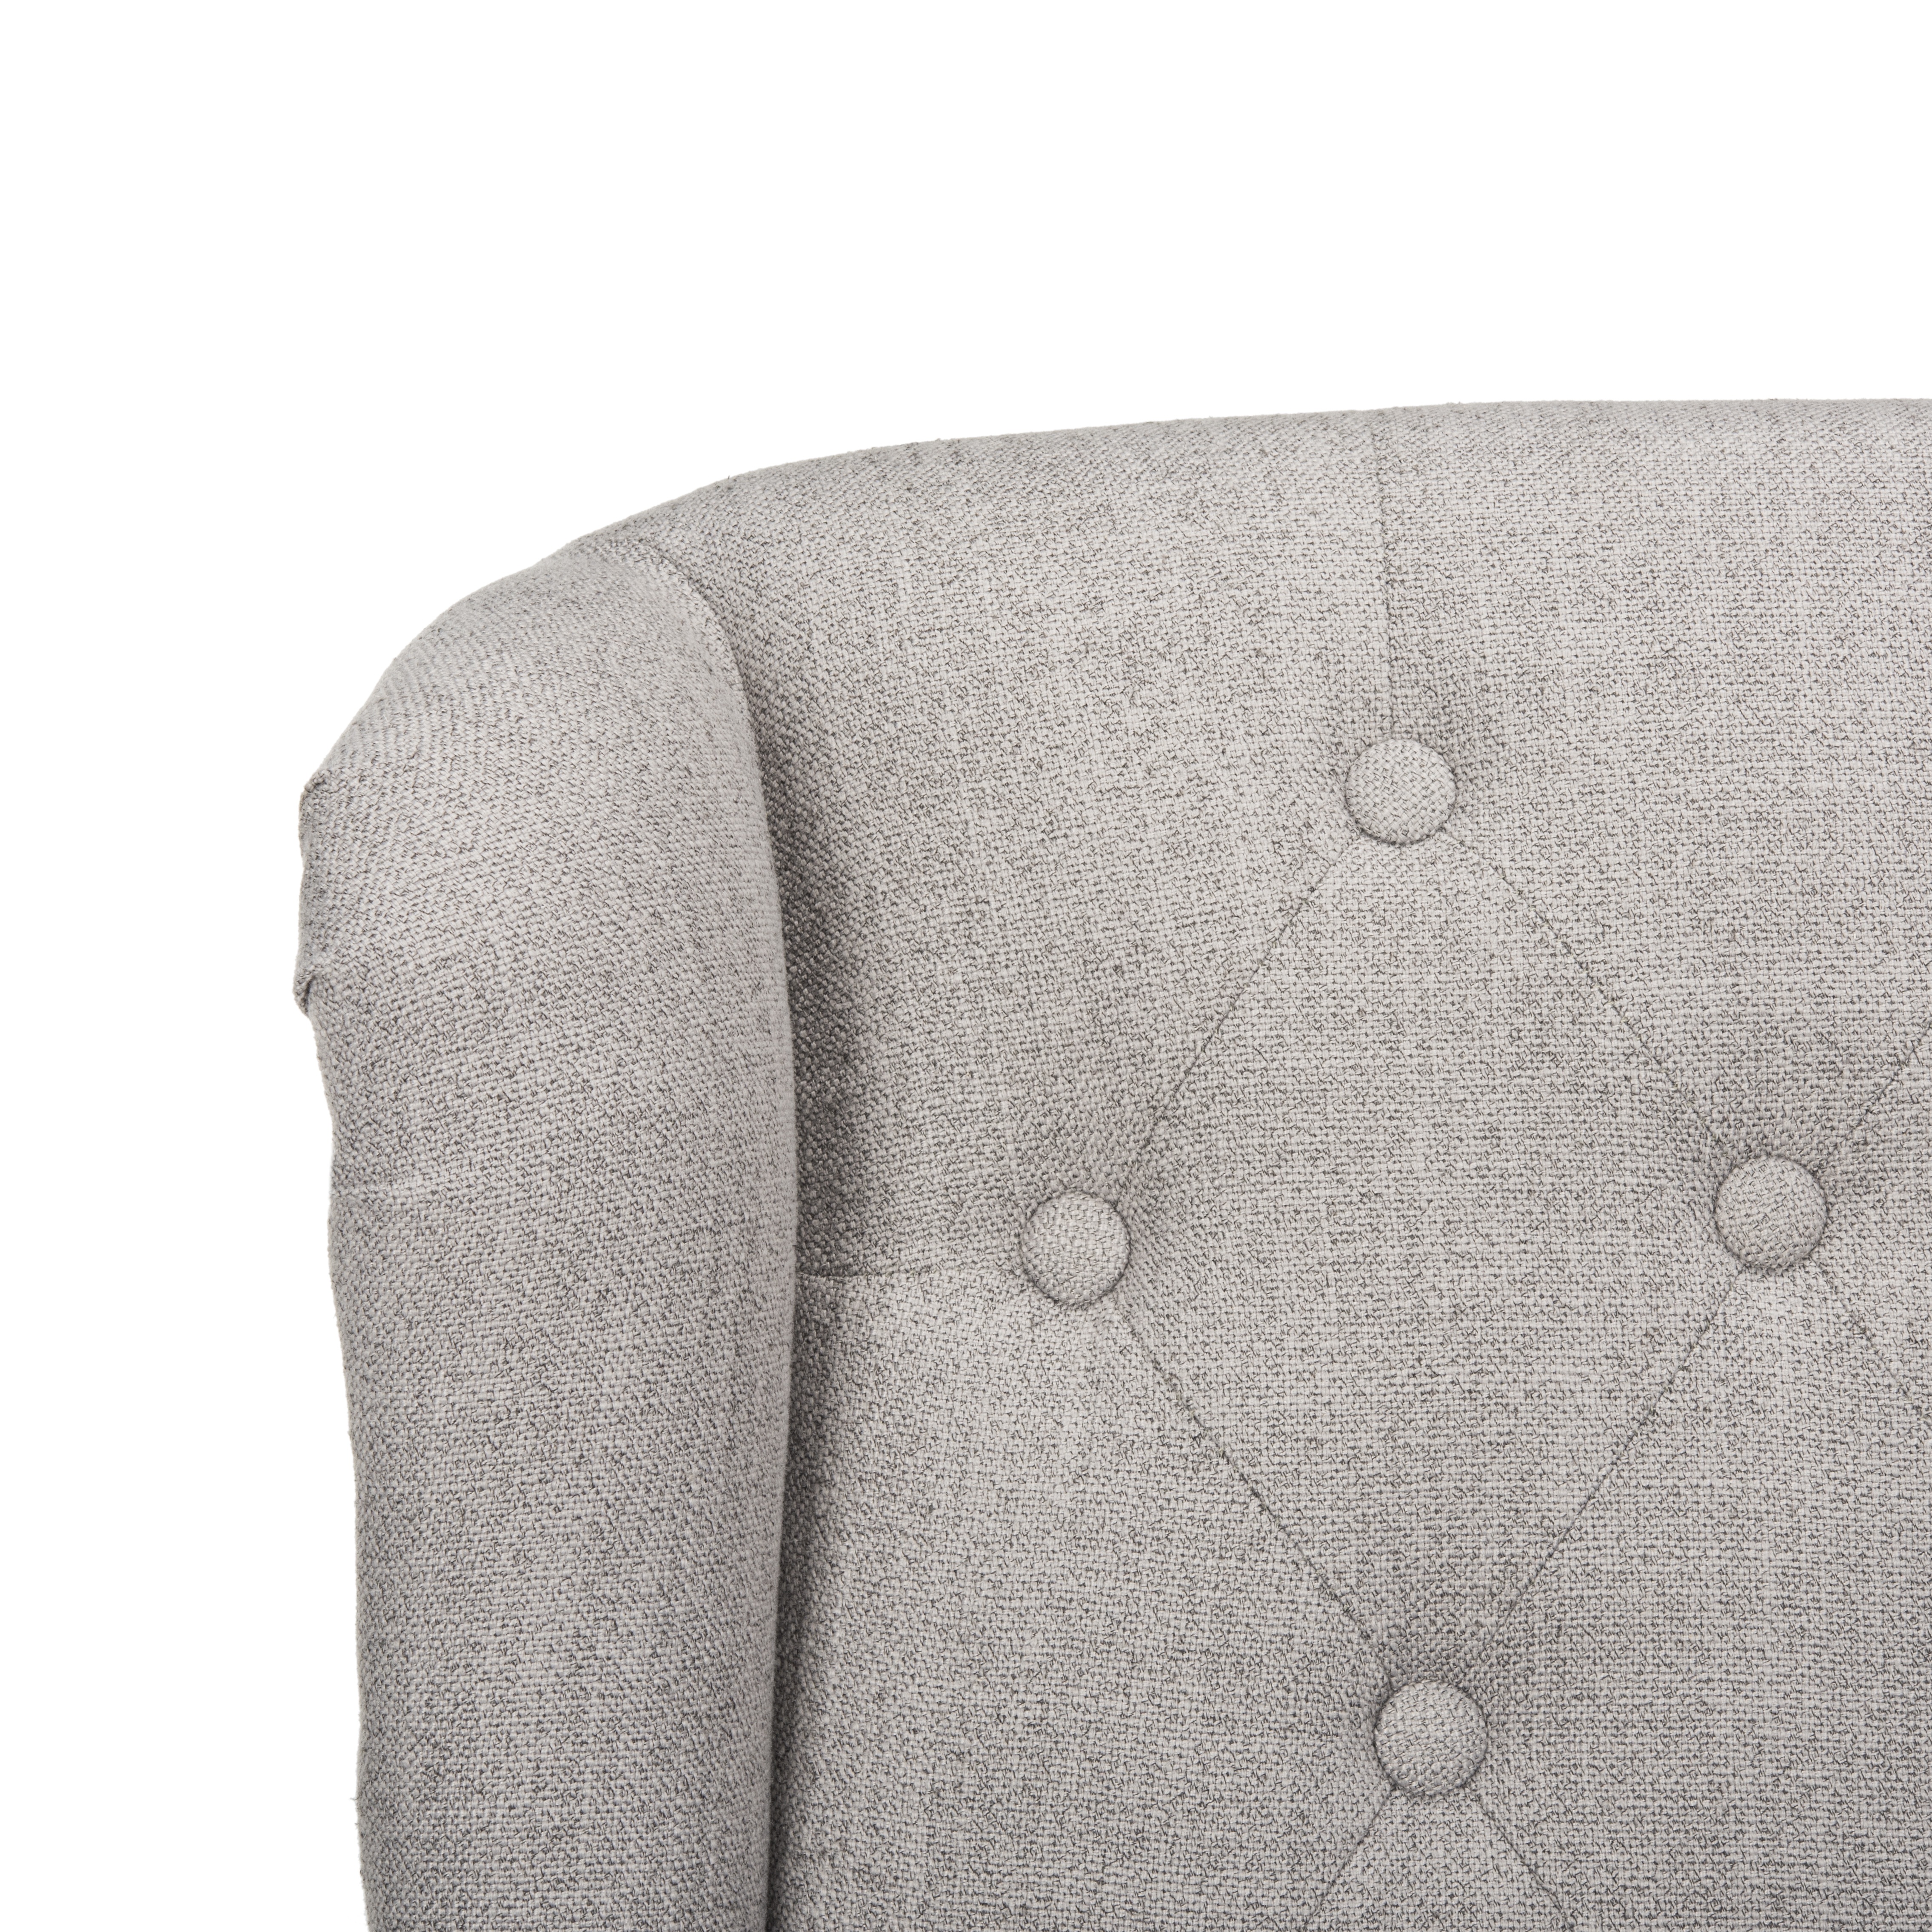 Ian Linen Chrome Leg Swivel Office Chair - Grey/Chrome - Arlo Home - Image 5